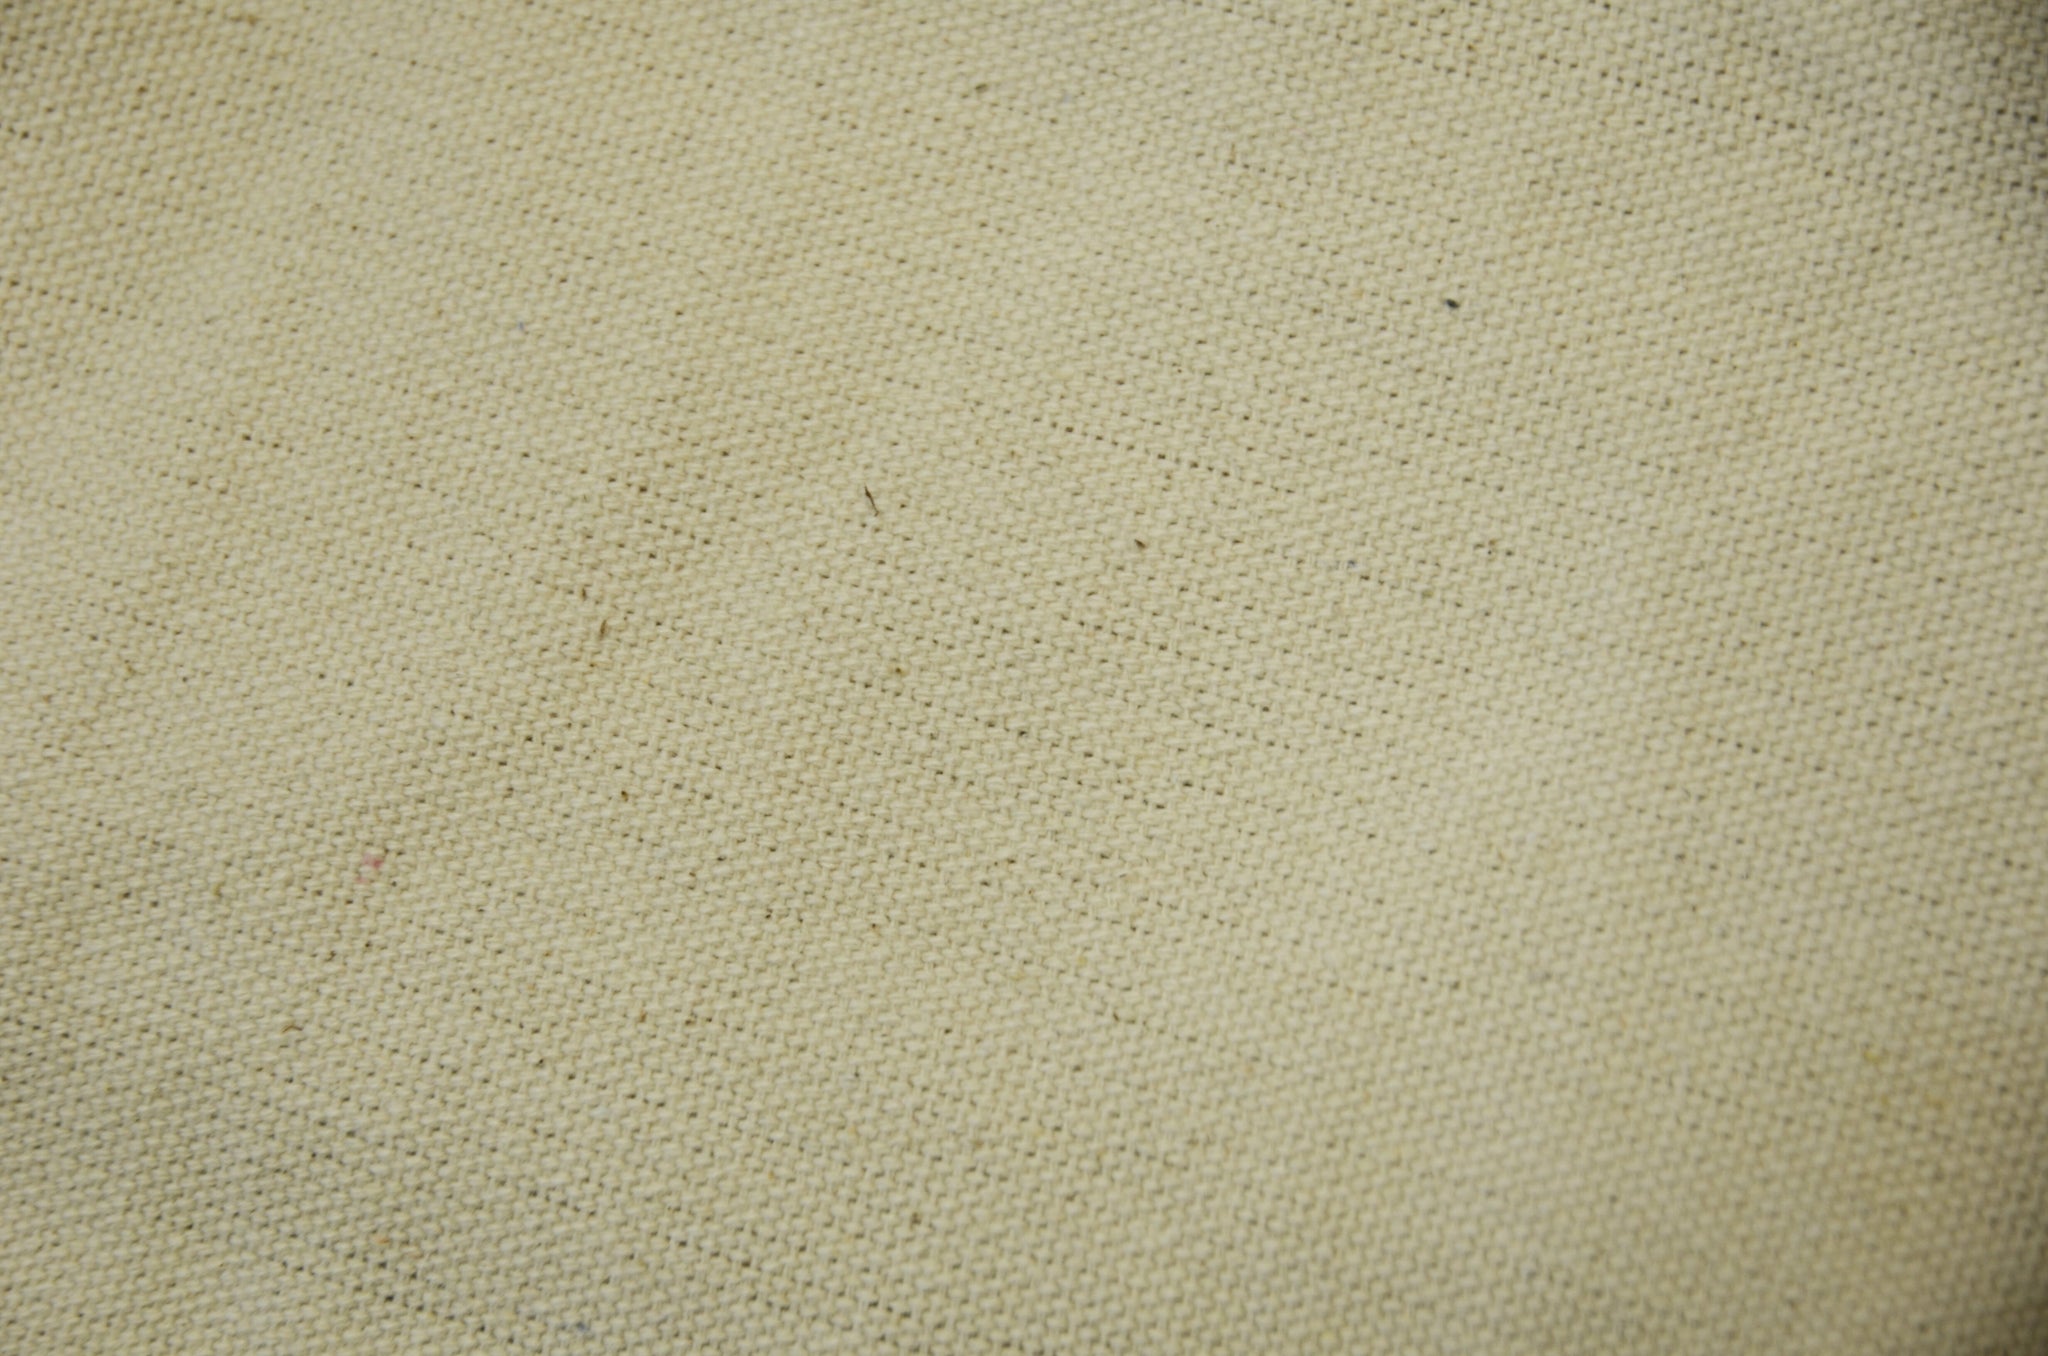 White 10oz Cotton Canvas/Duck Cloth, Preshrunk